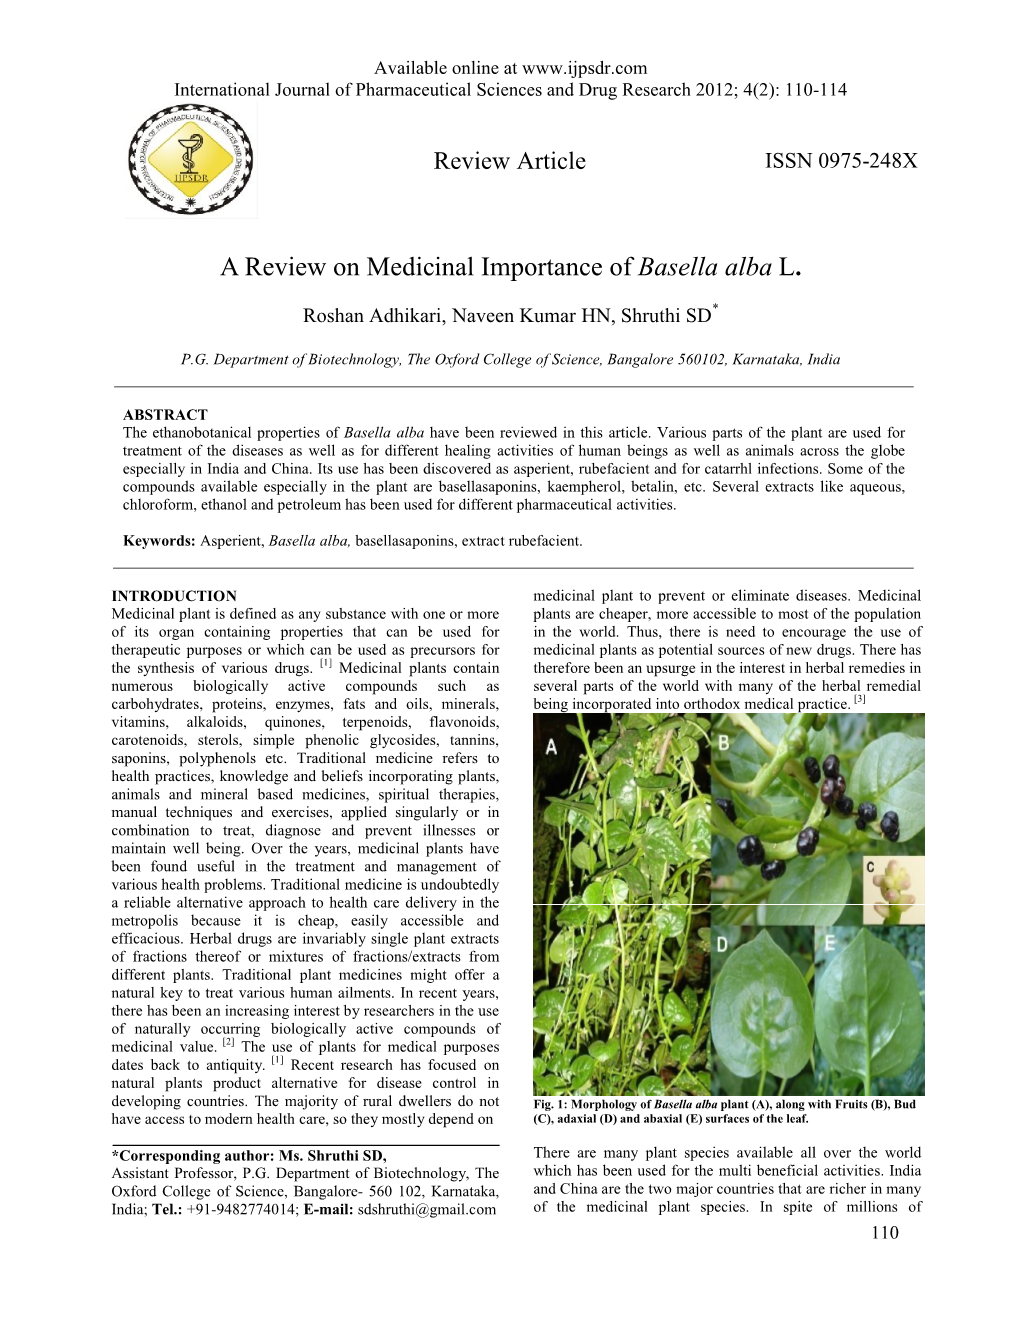 A Review on Medicinal Importance of Basella Alba L